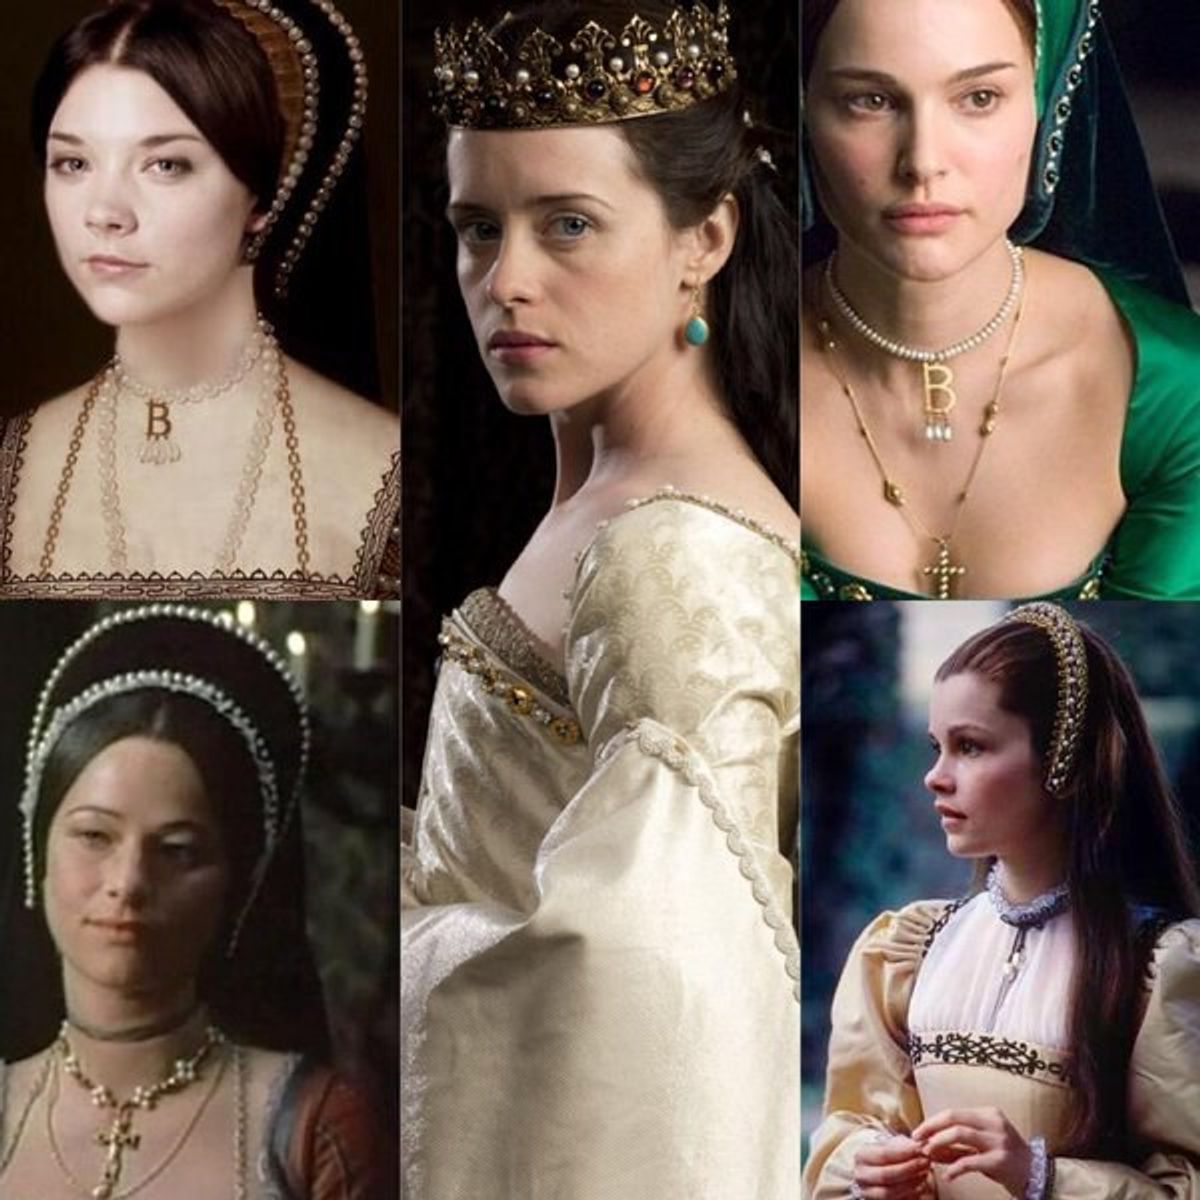 The Undeserved Trial: A Look Through The Eyes Of Anne Boleyn